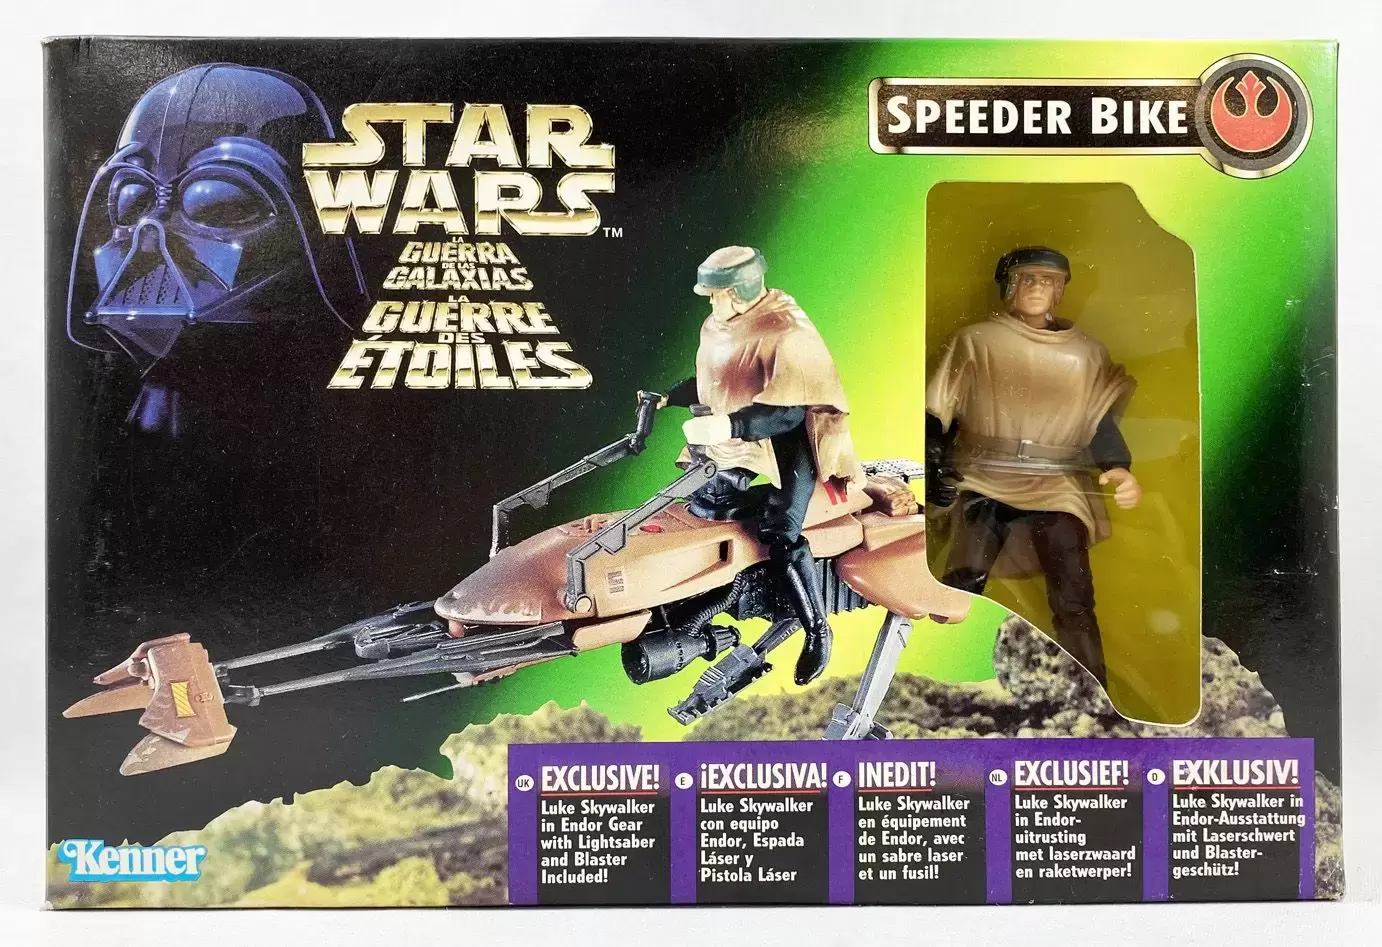 Power of the Force 2 - Speeder Bike with Luke Skywalker